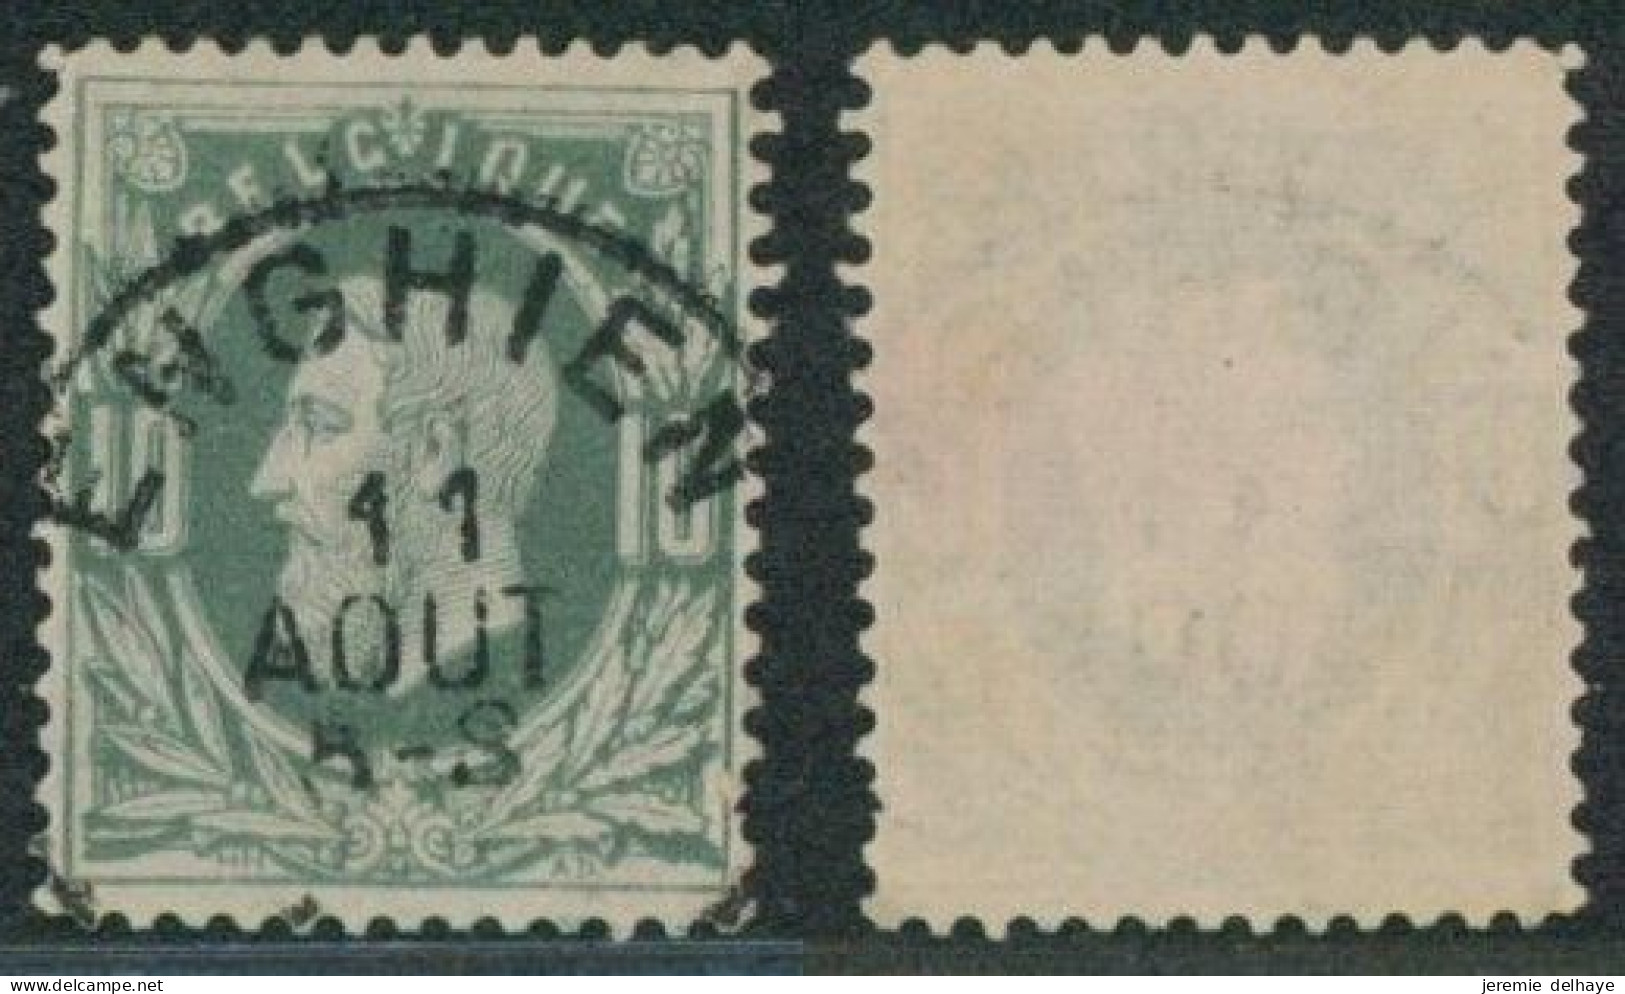 émission 1869 - N°30 Obl Simple Cercle "Enghien".  // (AD) - 1869-1883 Leopoldo II